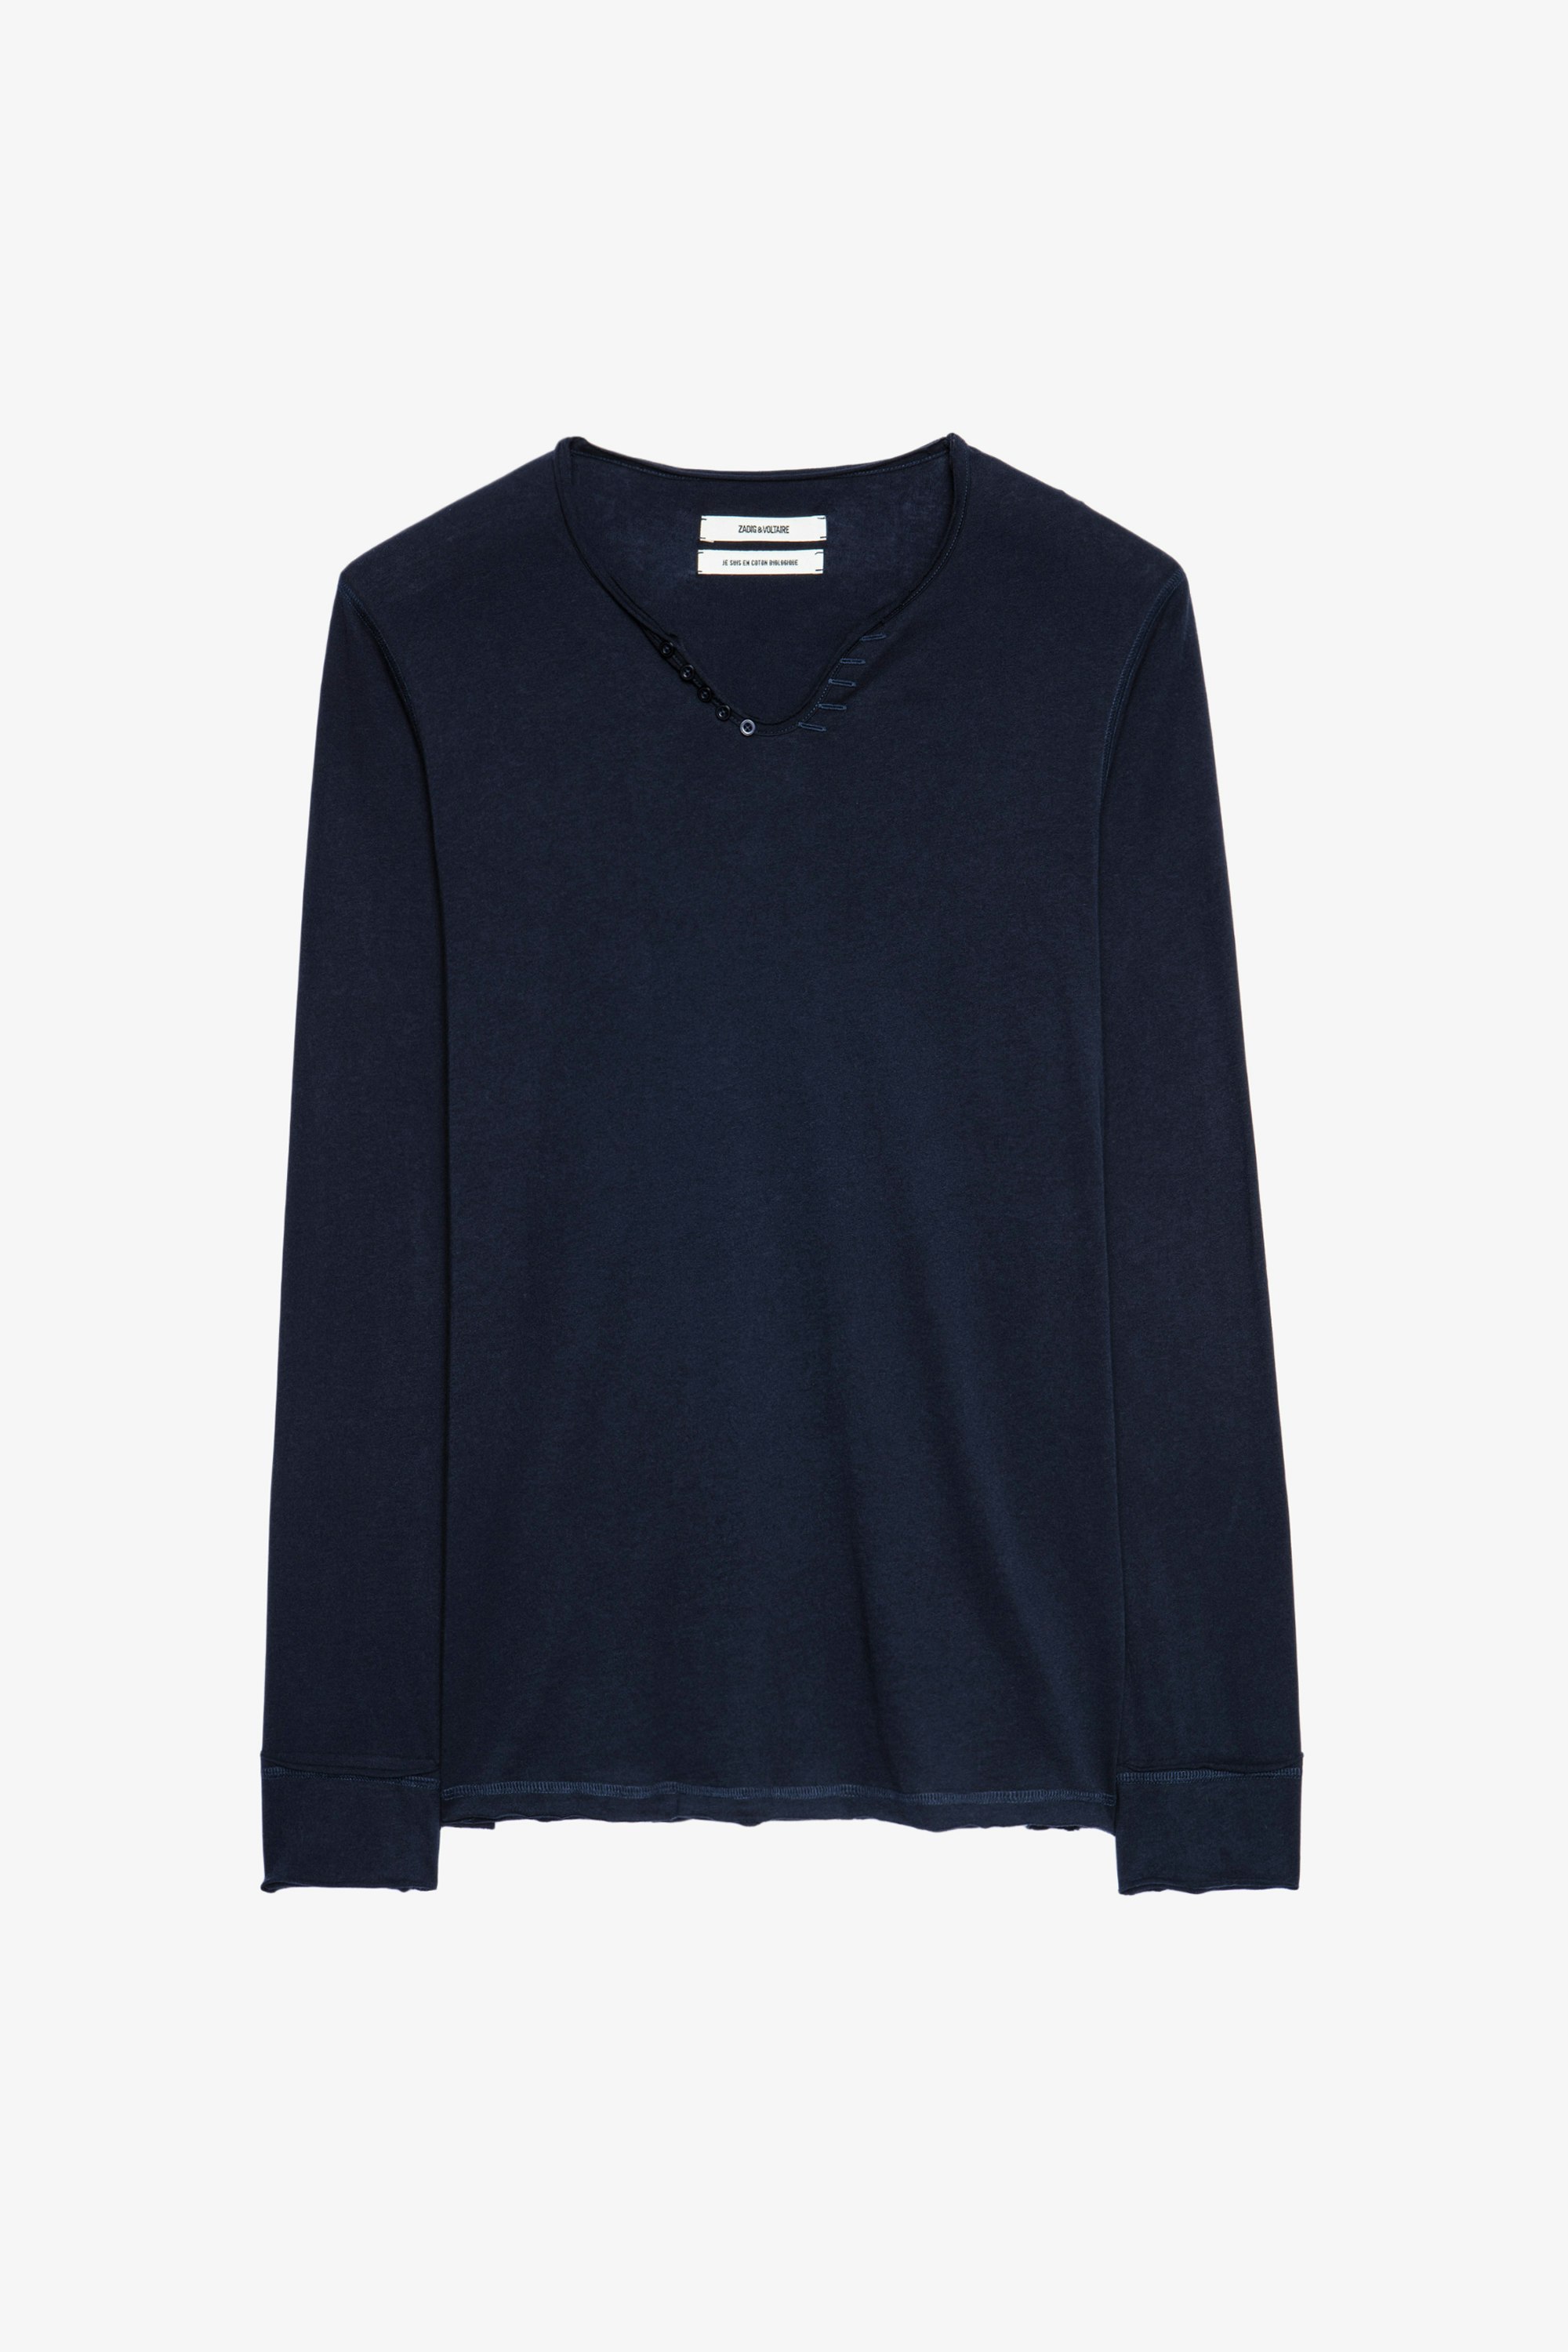 Monastir Ｔシャツ - Men’s blue cotton henley T-shirt